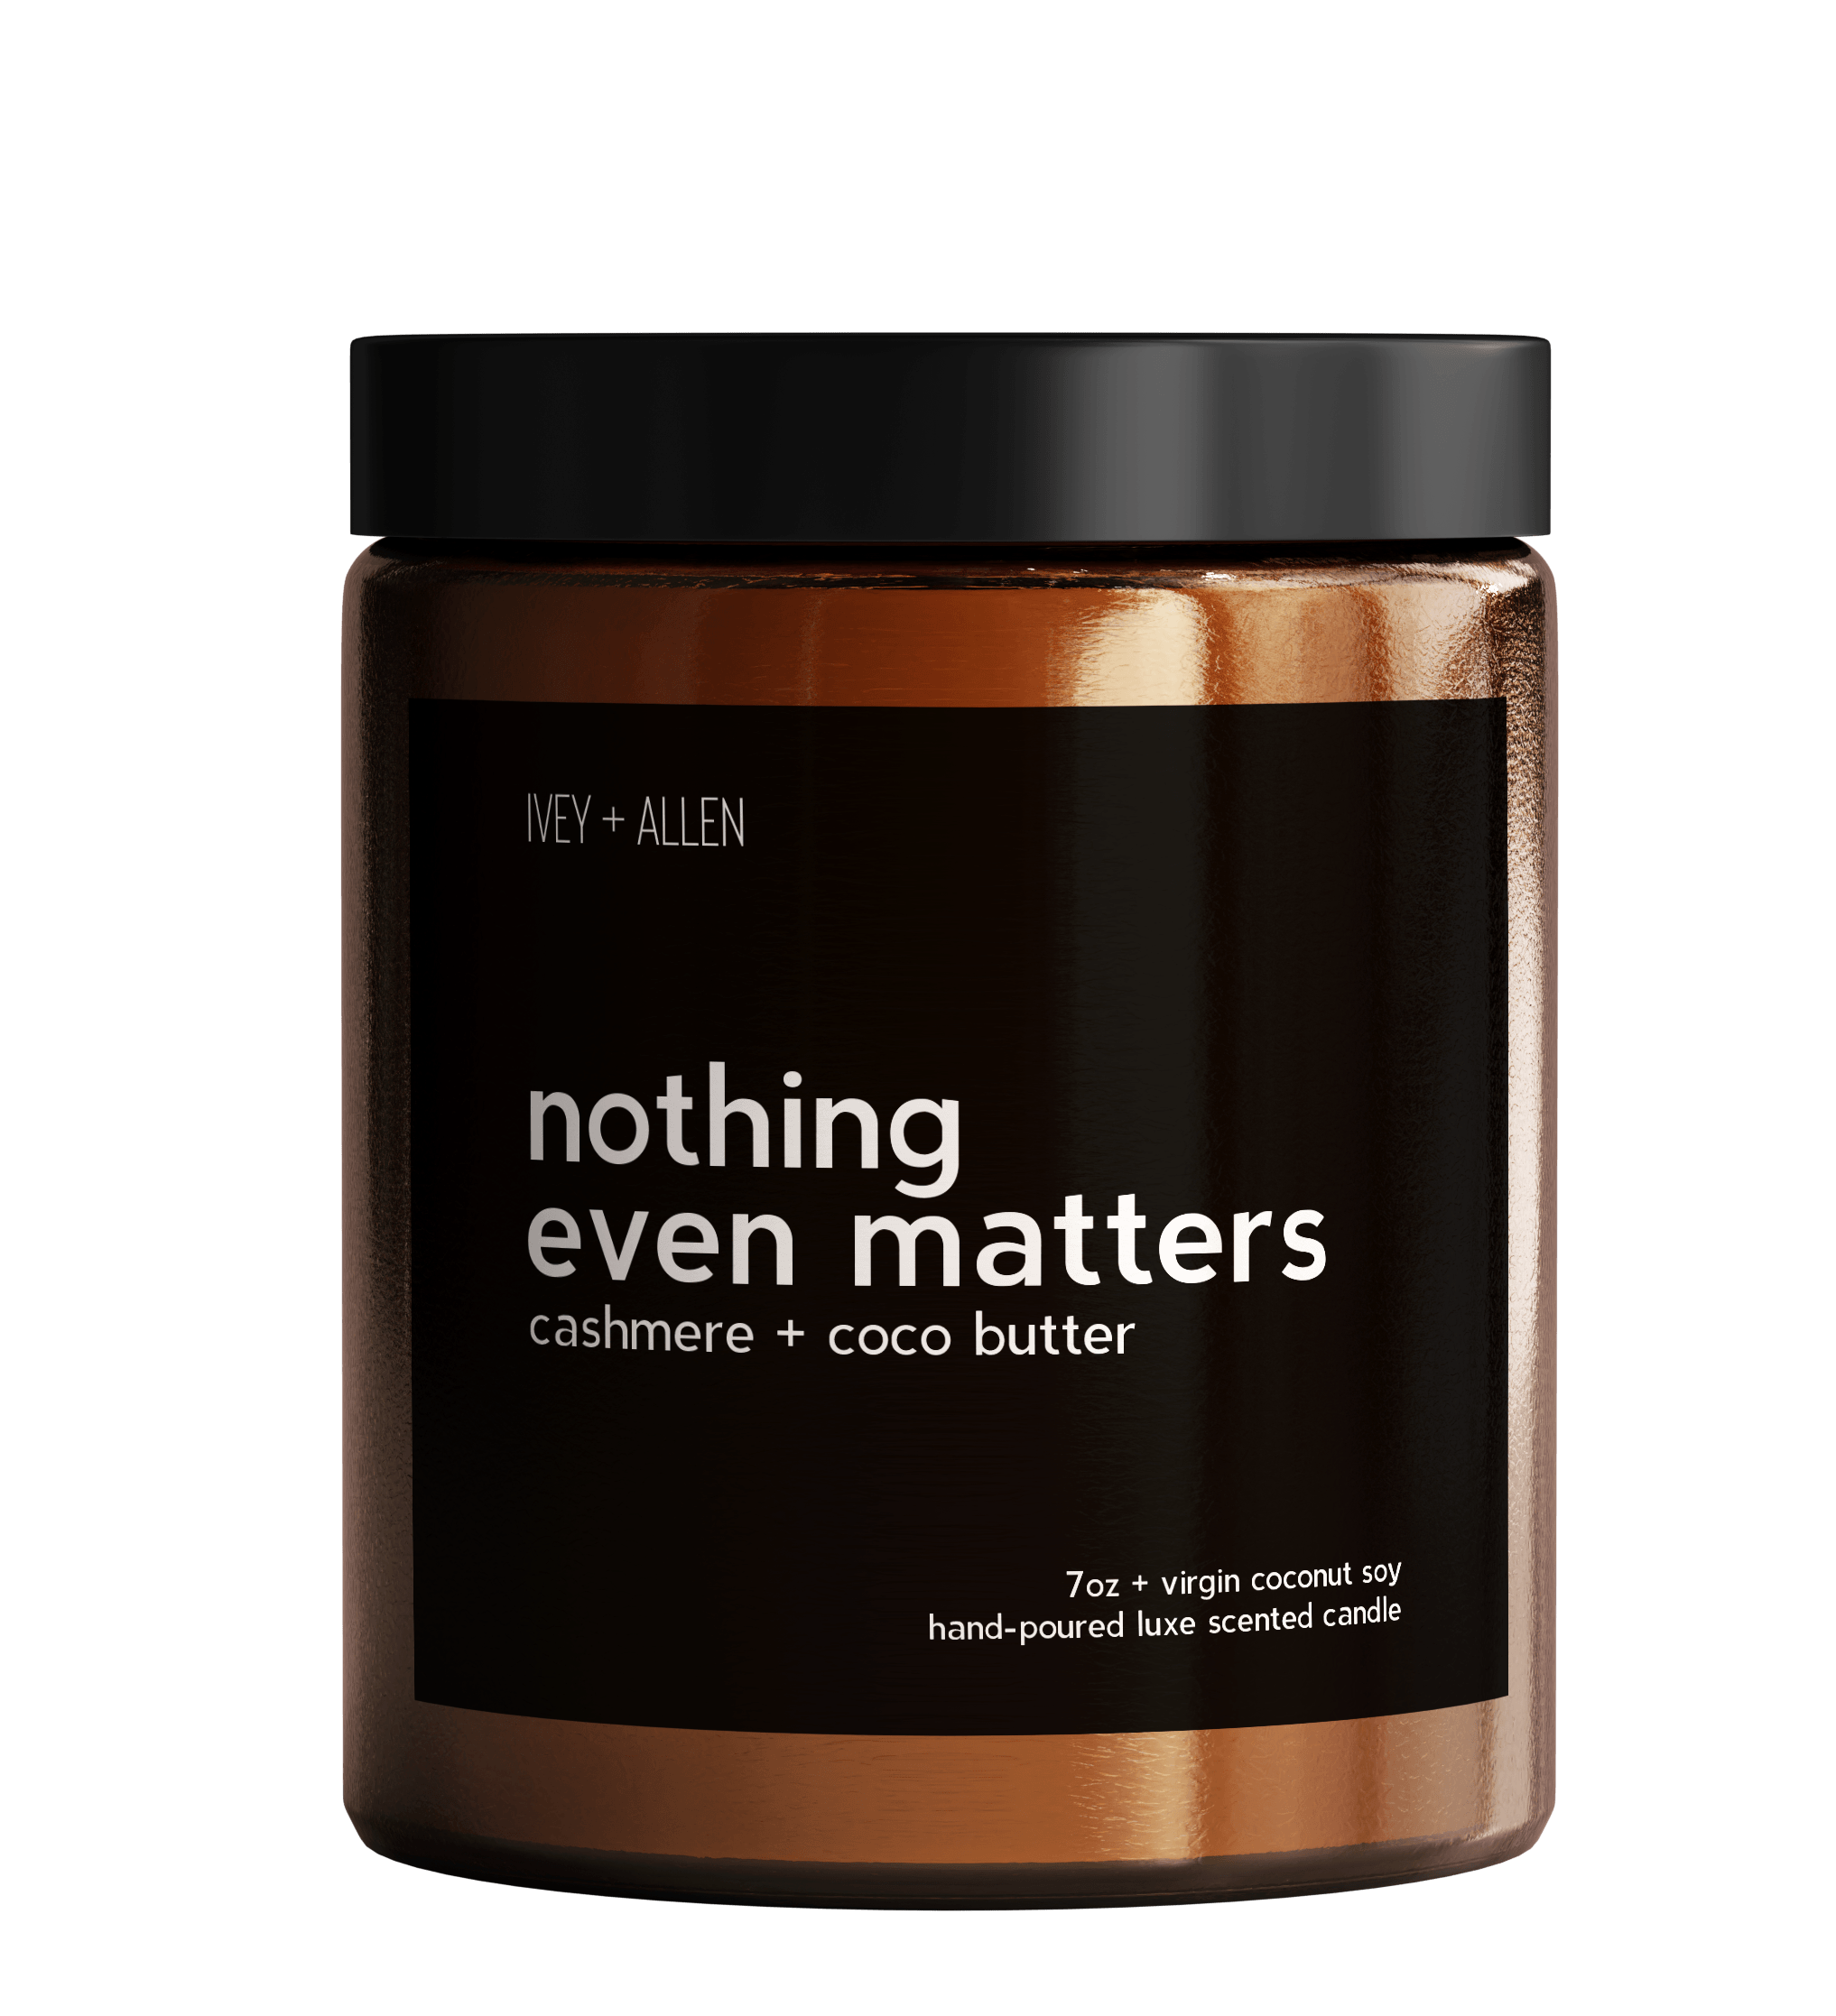 nothing even matters - IVEY + ALLEN